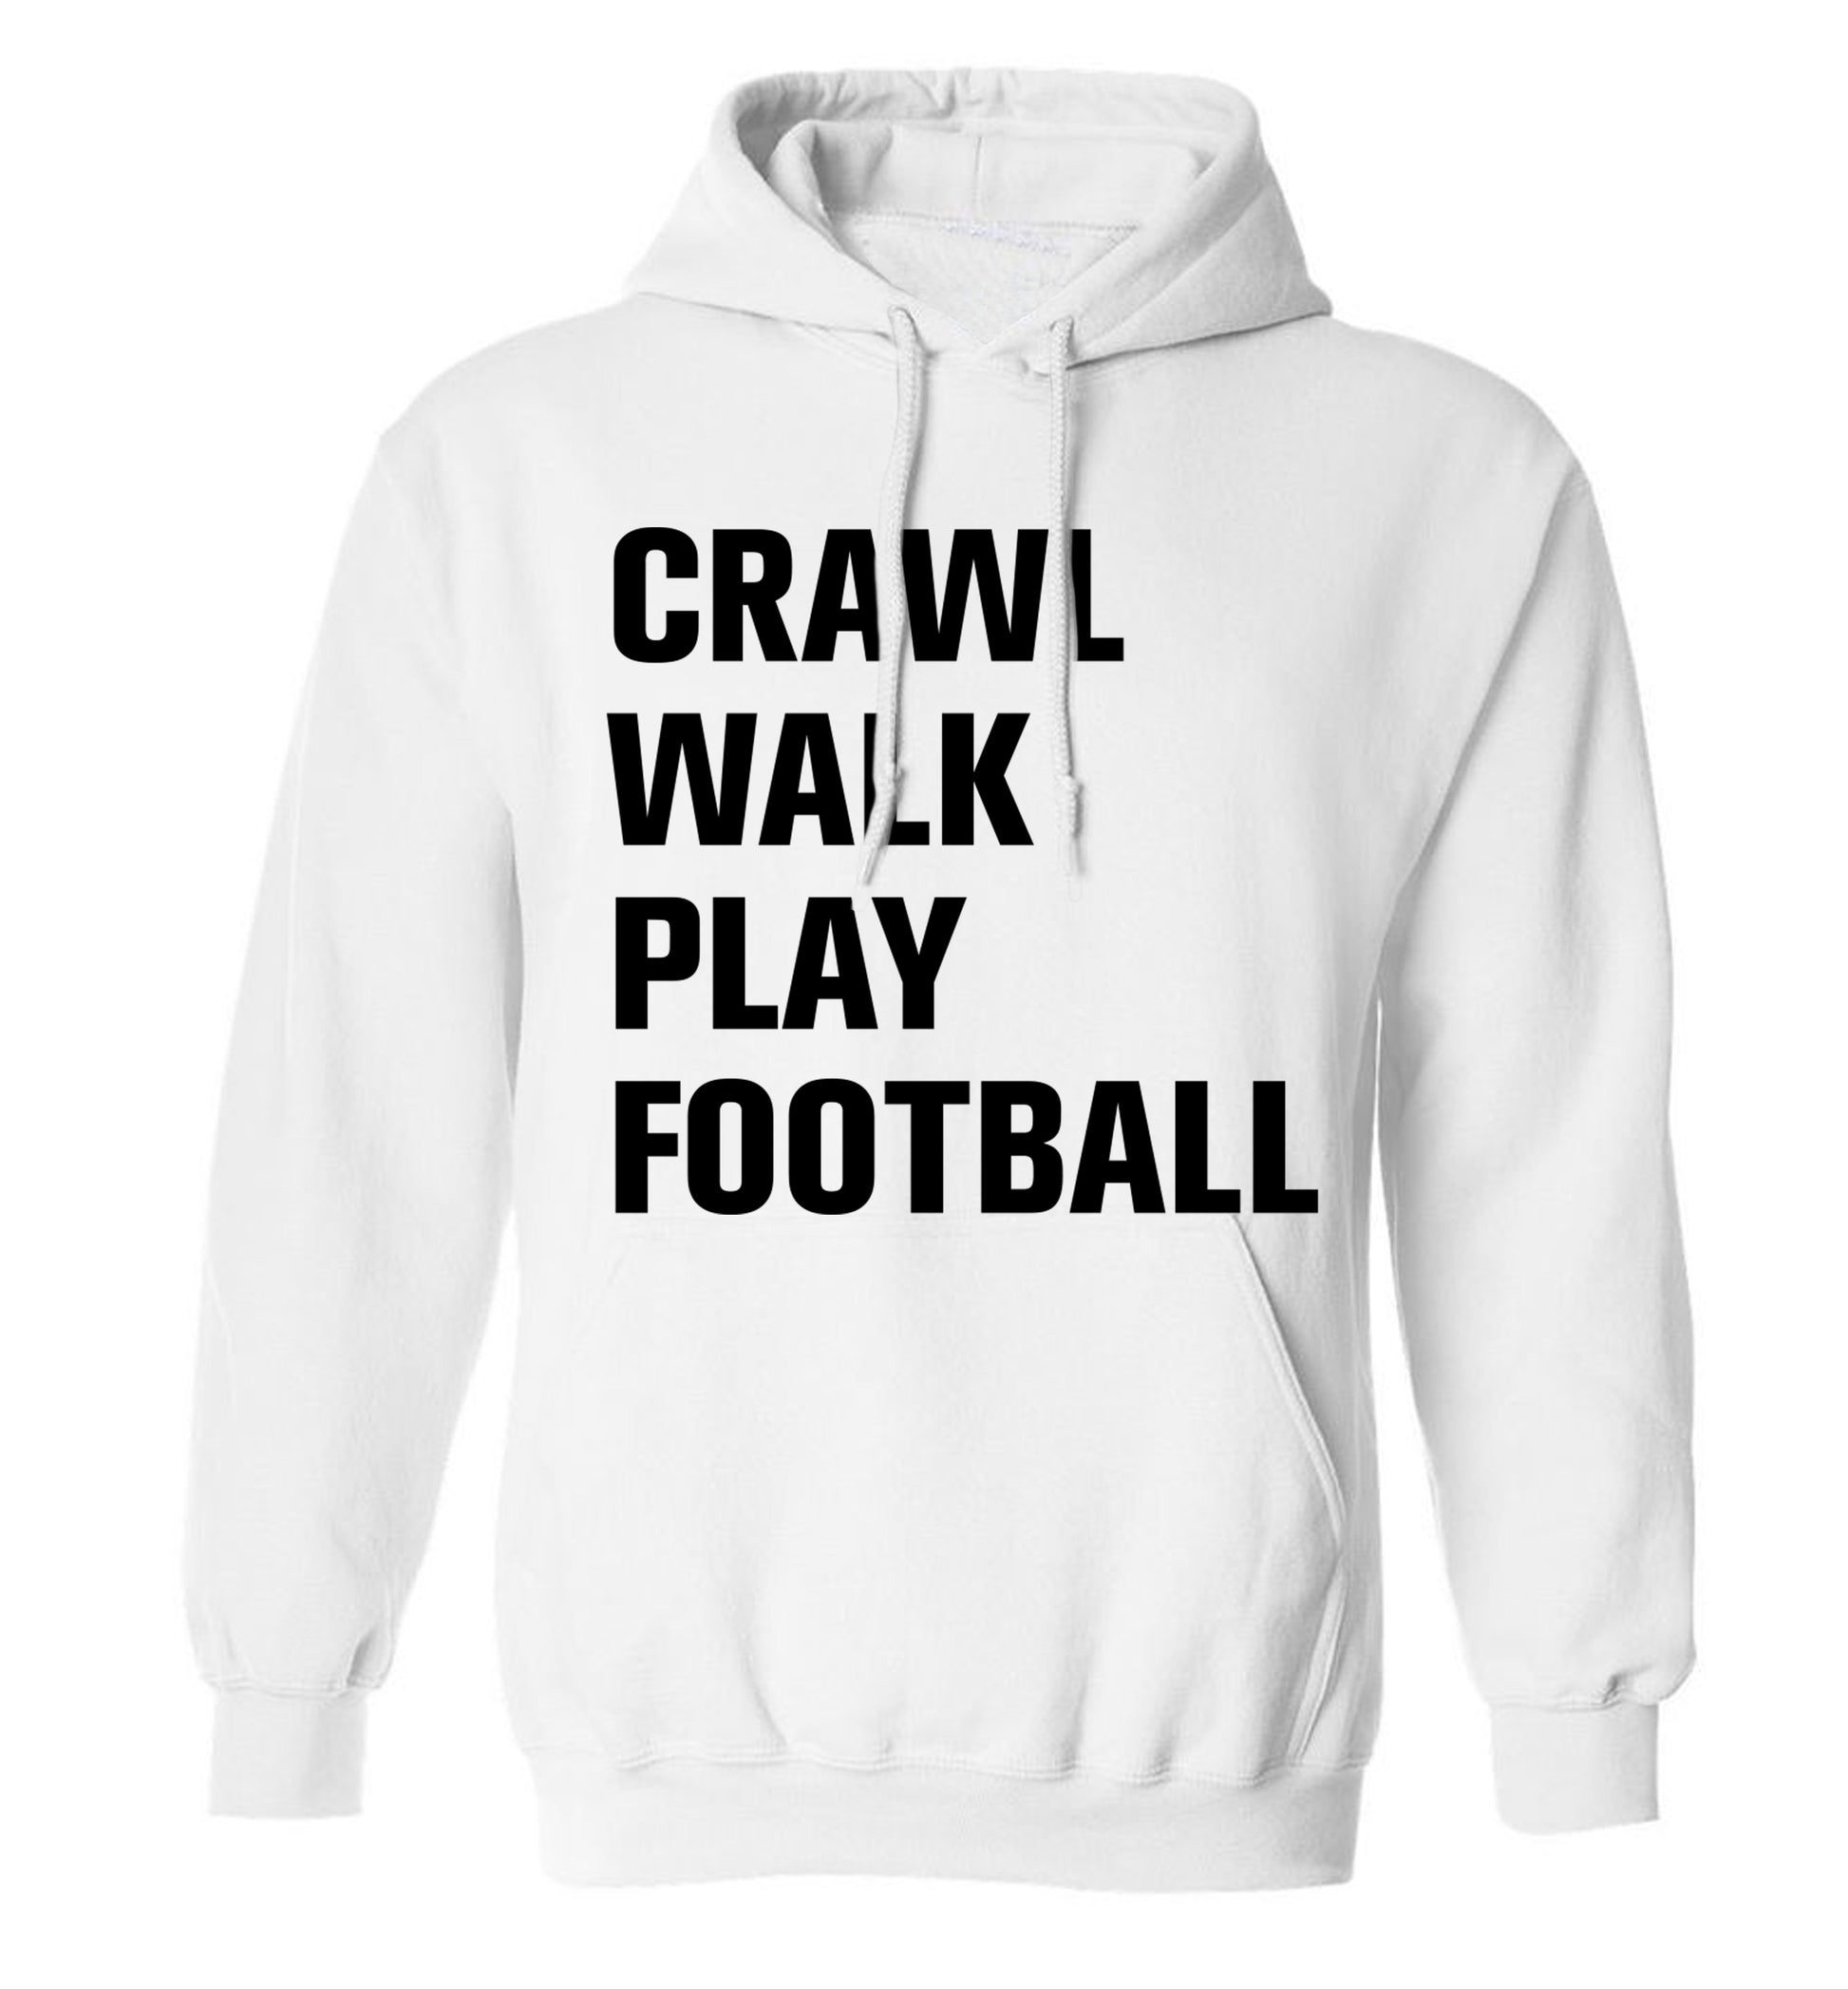 Crawl, walk, play football adults unisex white hoodie 2XL